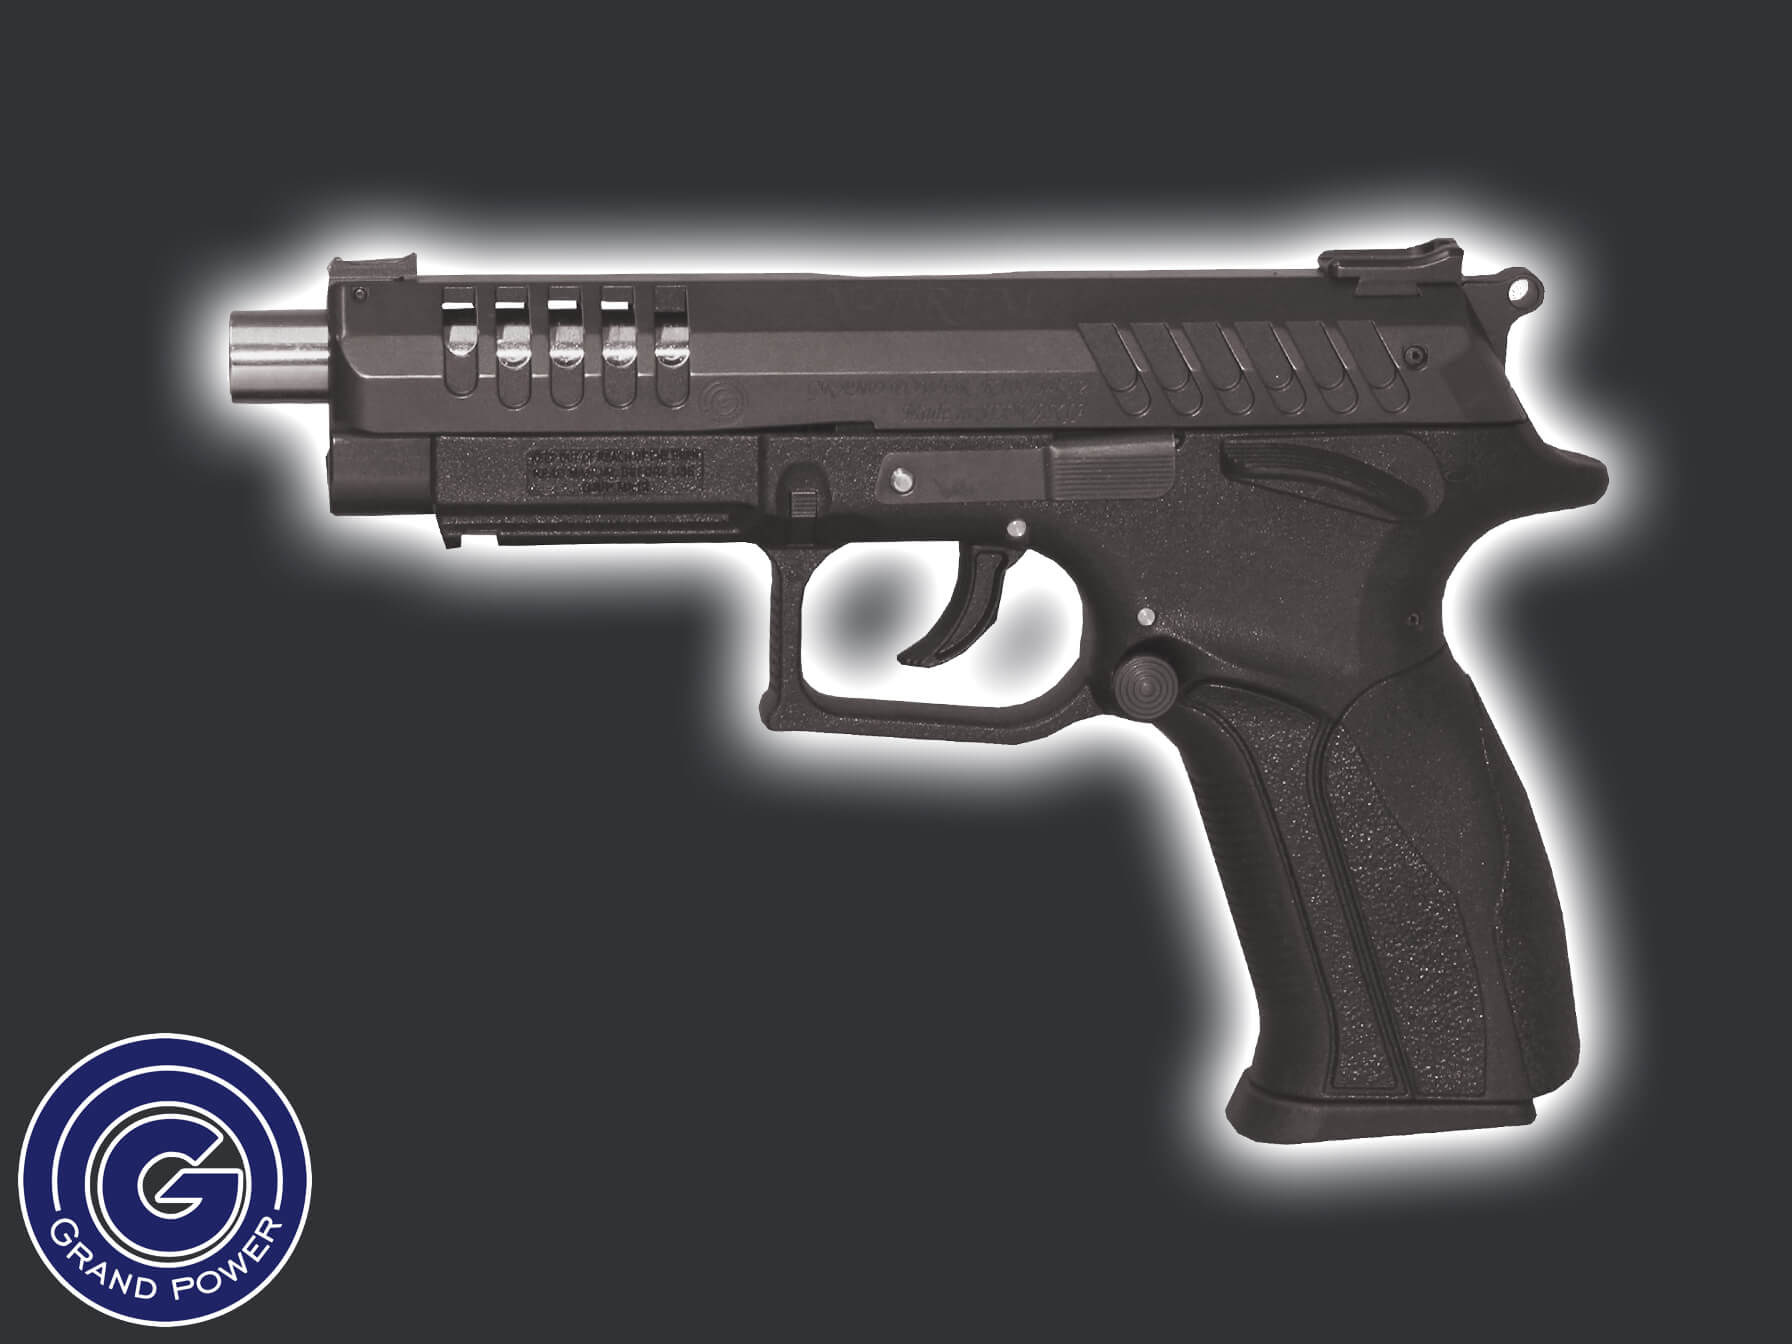 Grand power k 22 x-trim пистолет — характеристики, фото, ттх